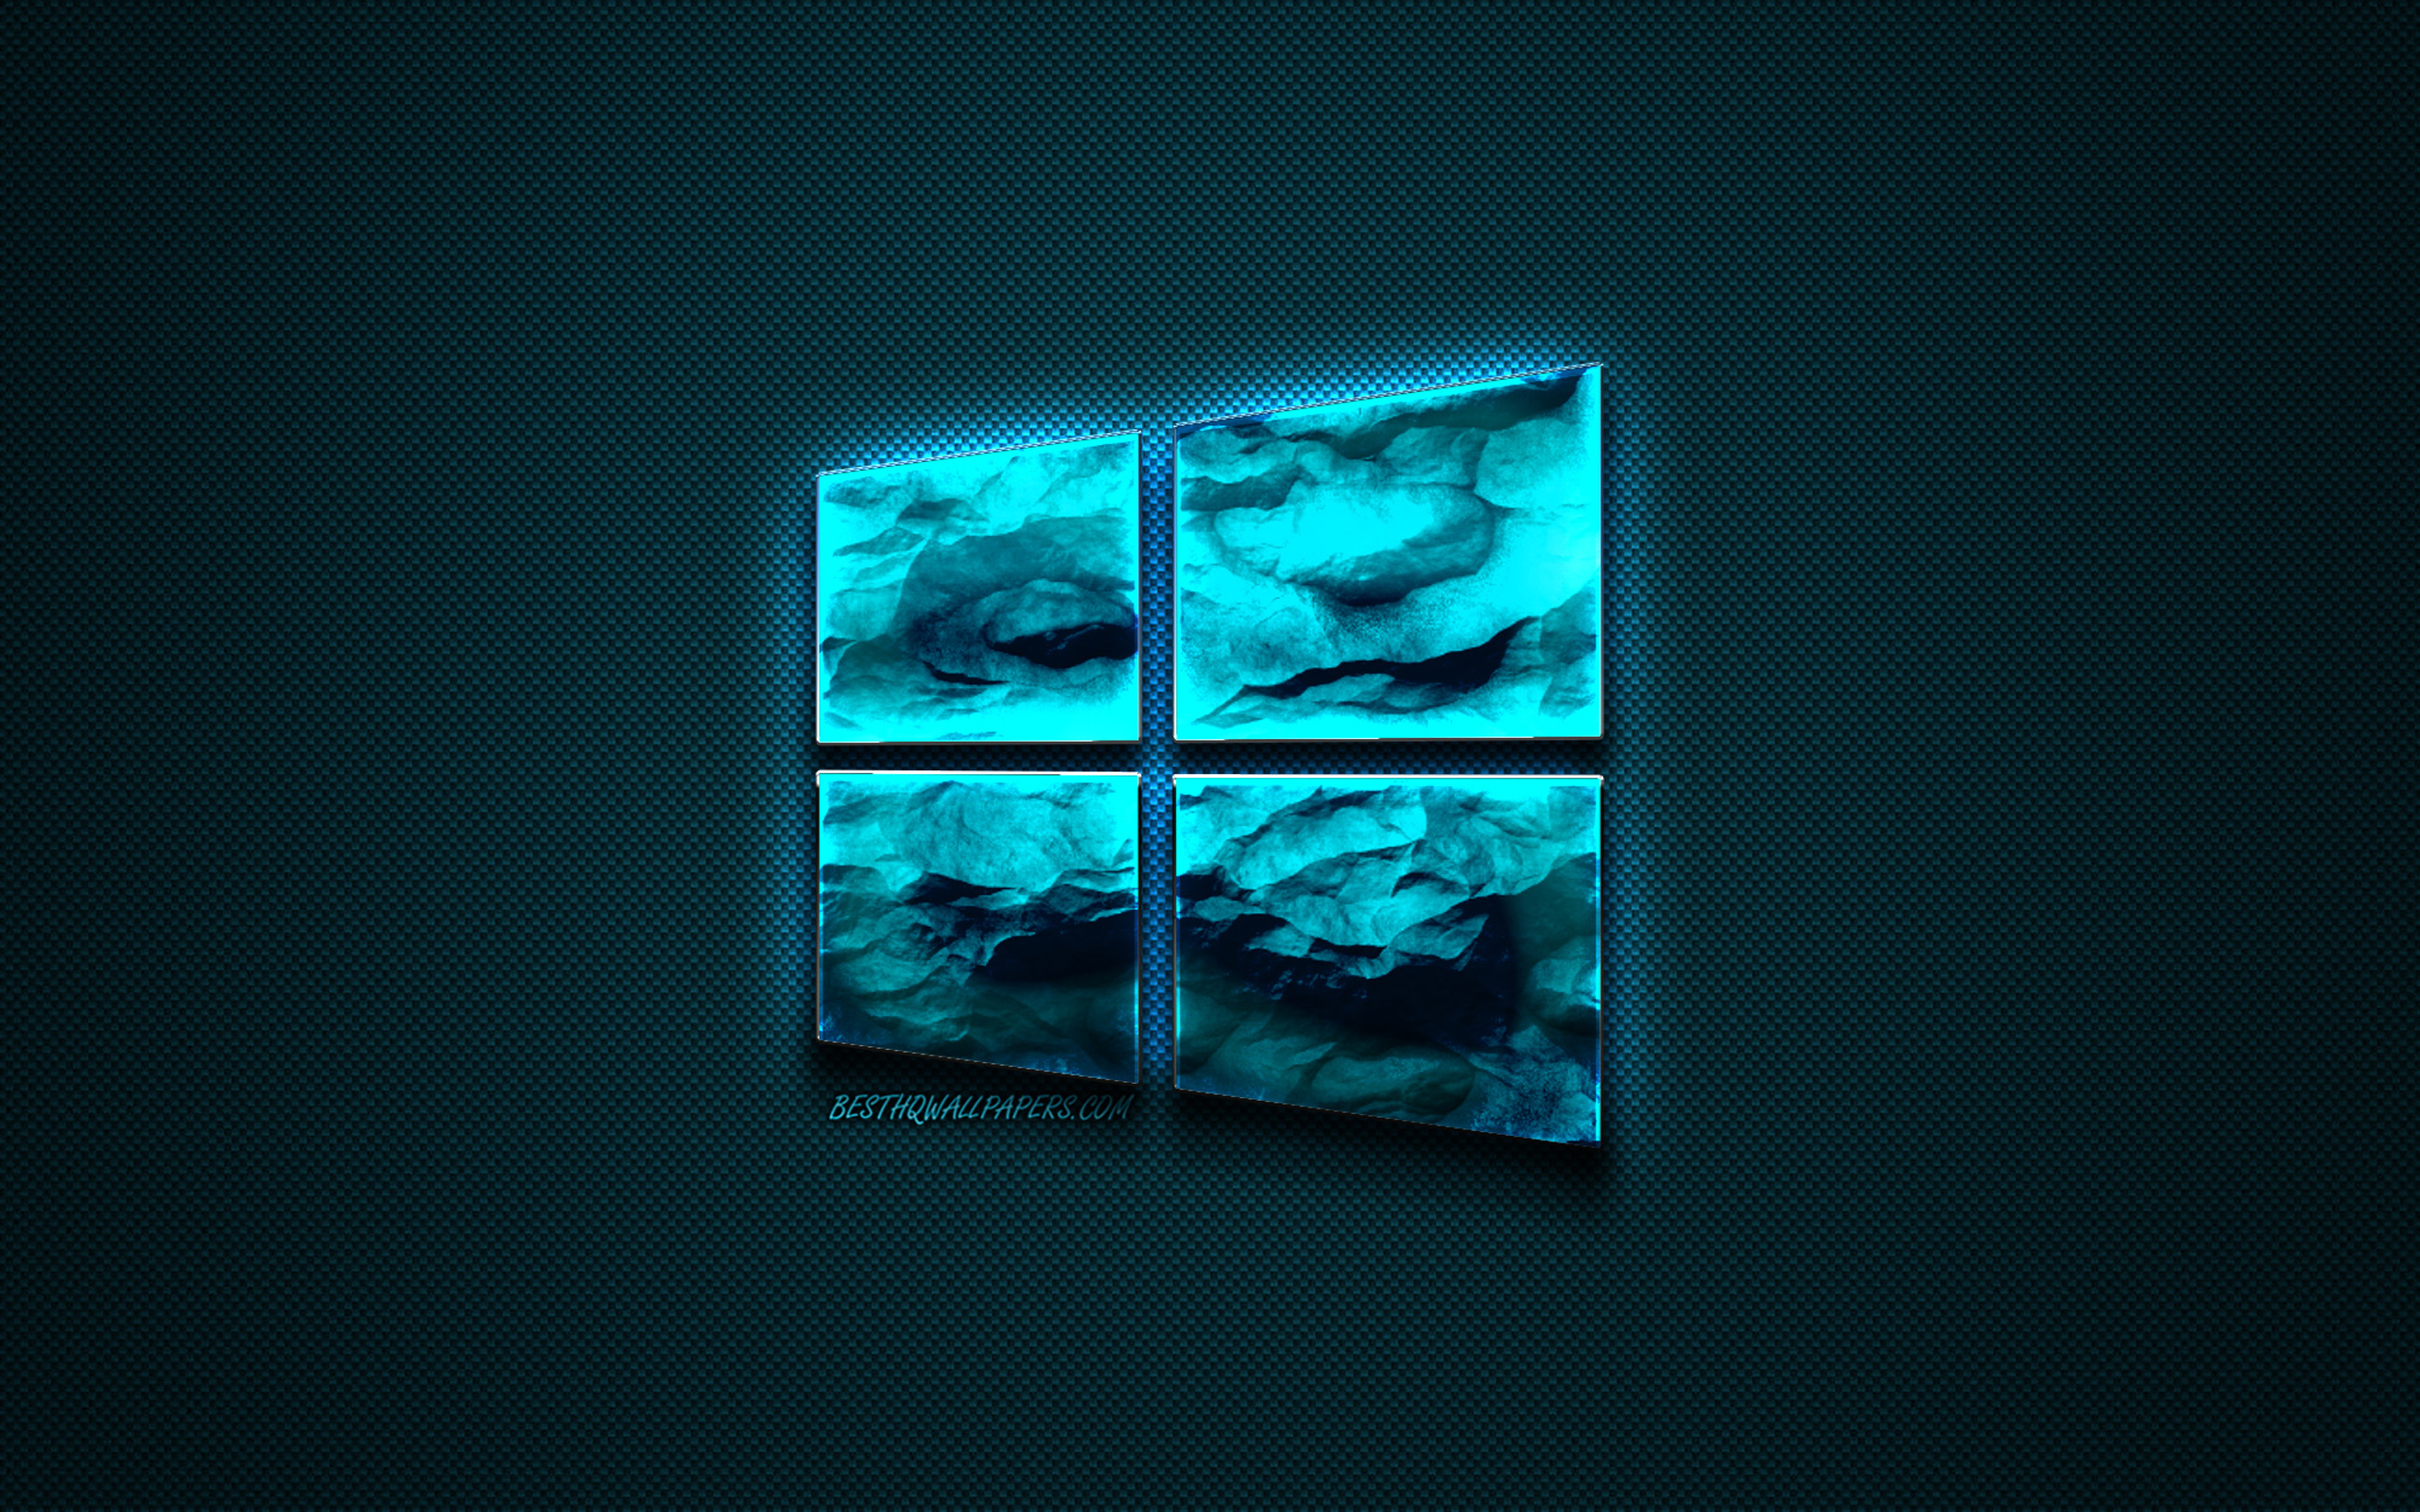 Download wallpaper Windows 10 blue logo, creative blue art, Windows 10 emblem, dark blue background, Windows, logo, brands for desktop with resolution 2560x1600. High Quality HD picture wallpaper